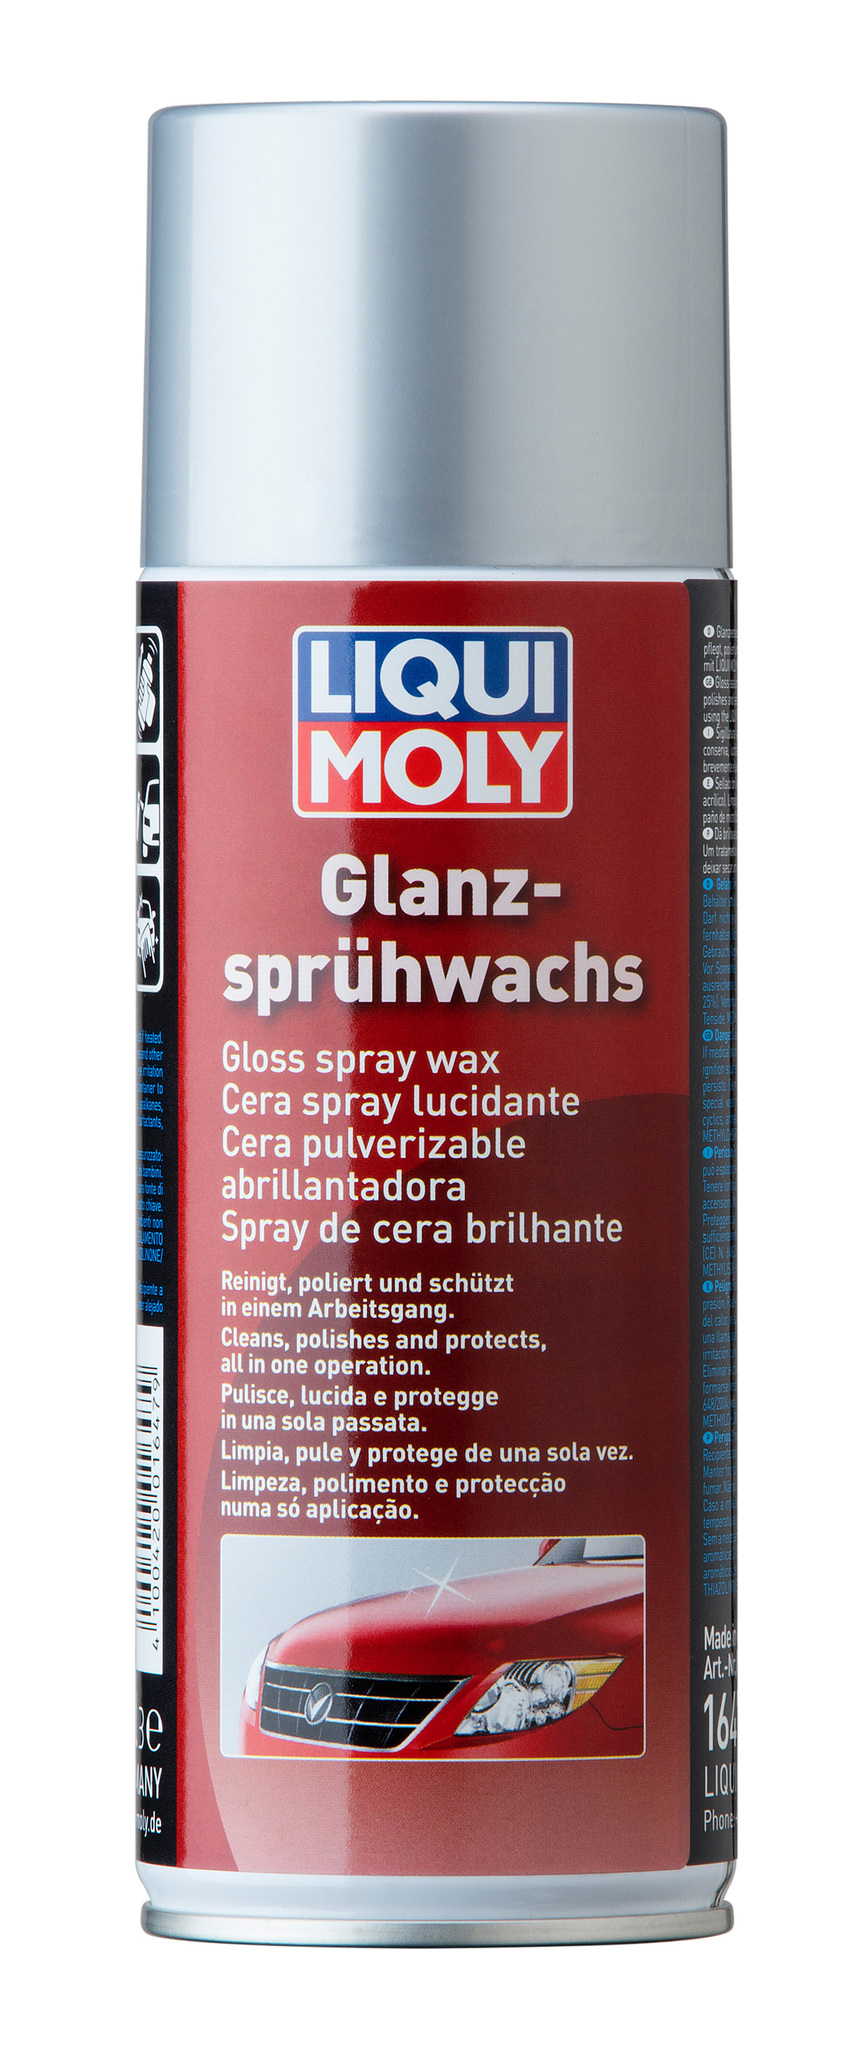 Liqui Moly Glanz-Spruhwachs Жидкий воск